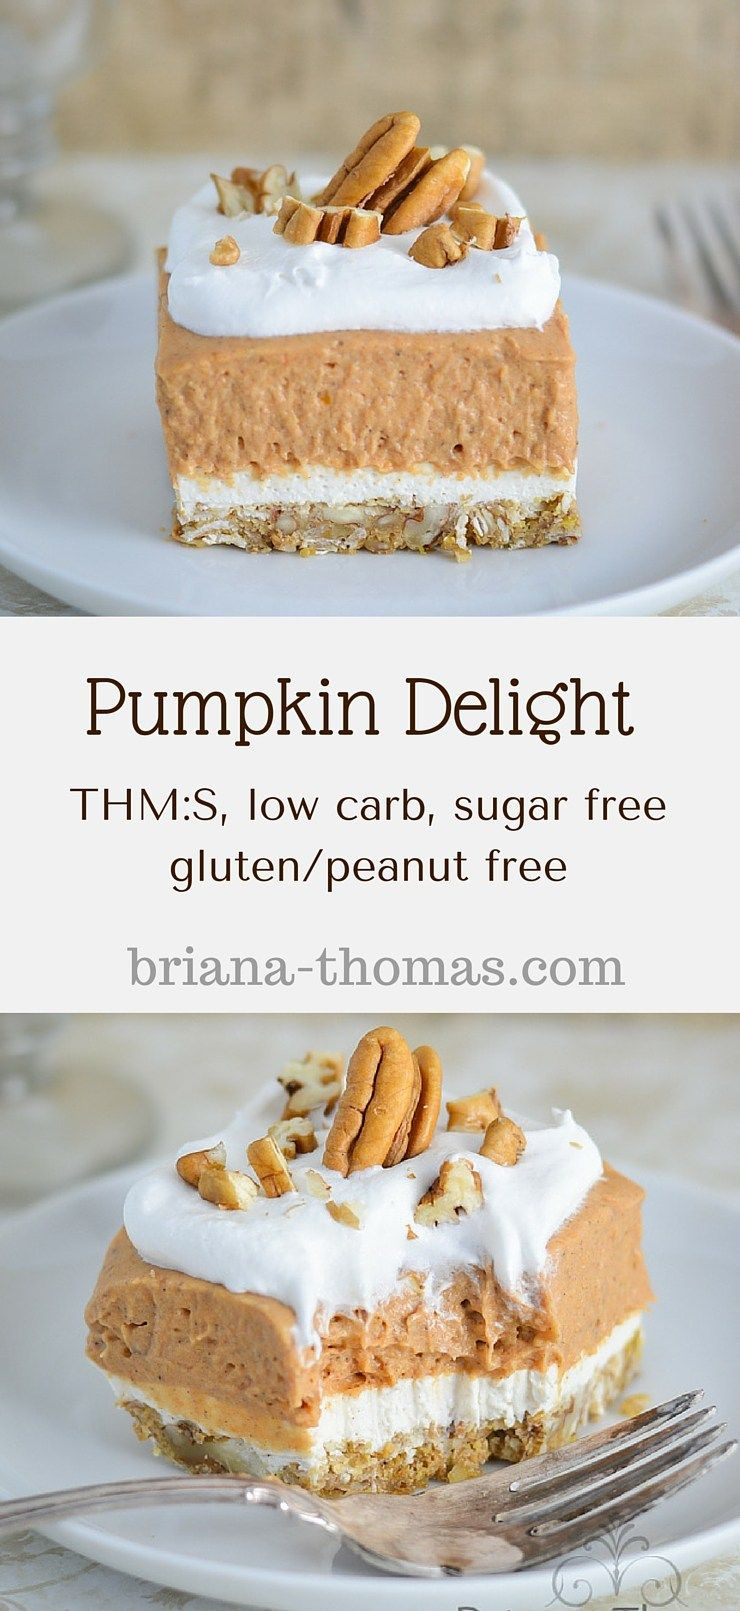 Gluten Free Sugar Free Dessert Recipes
 Pumpkin Delight Recipe